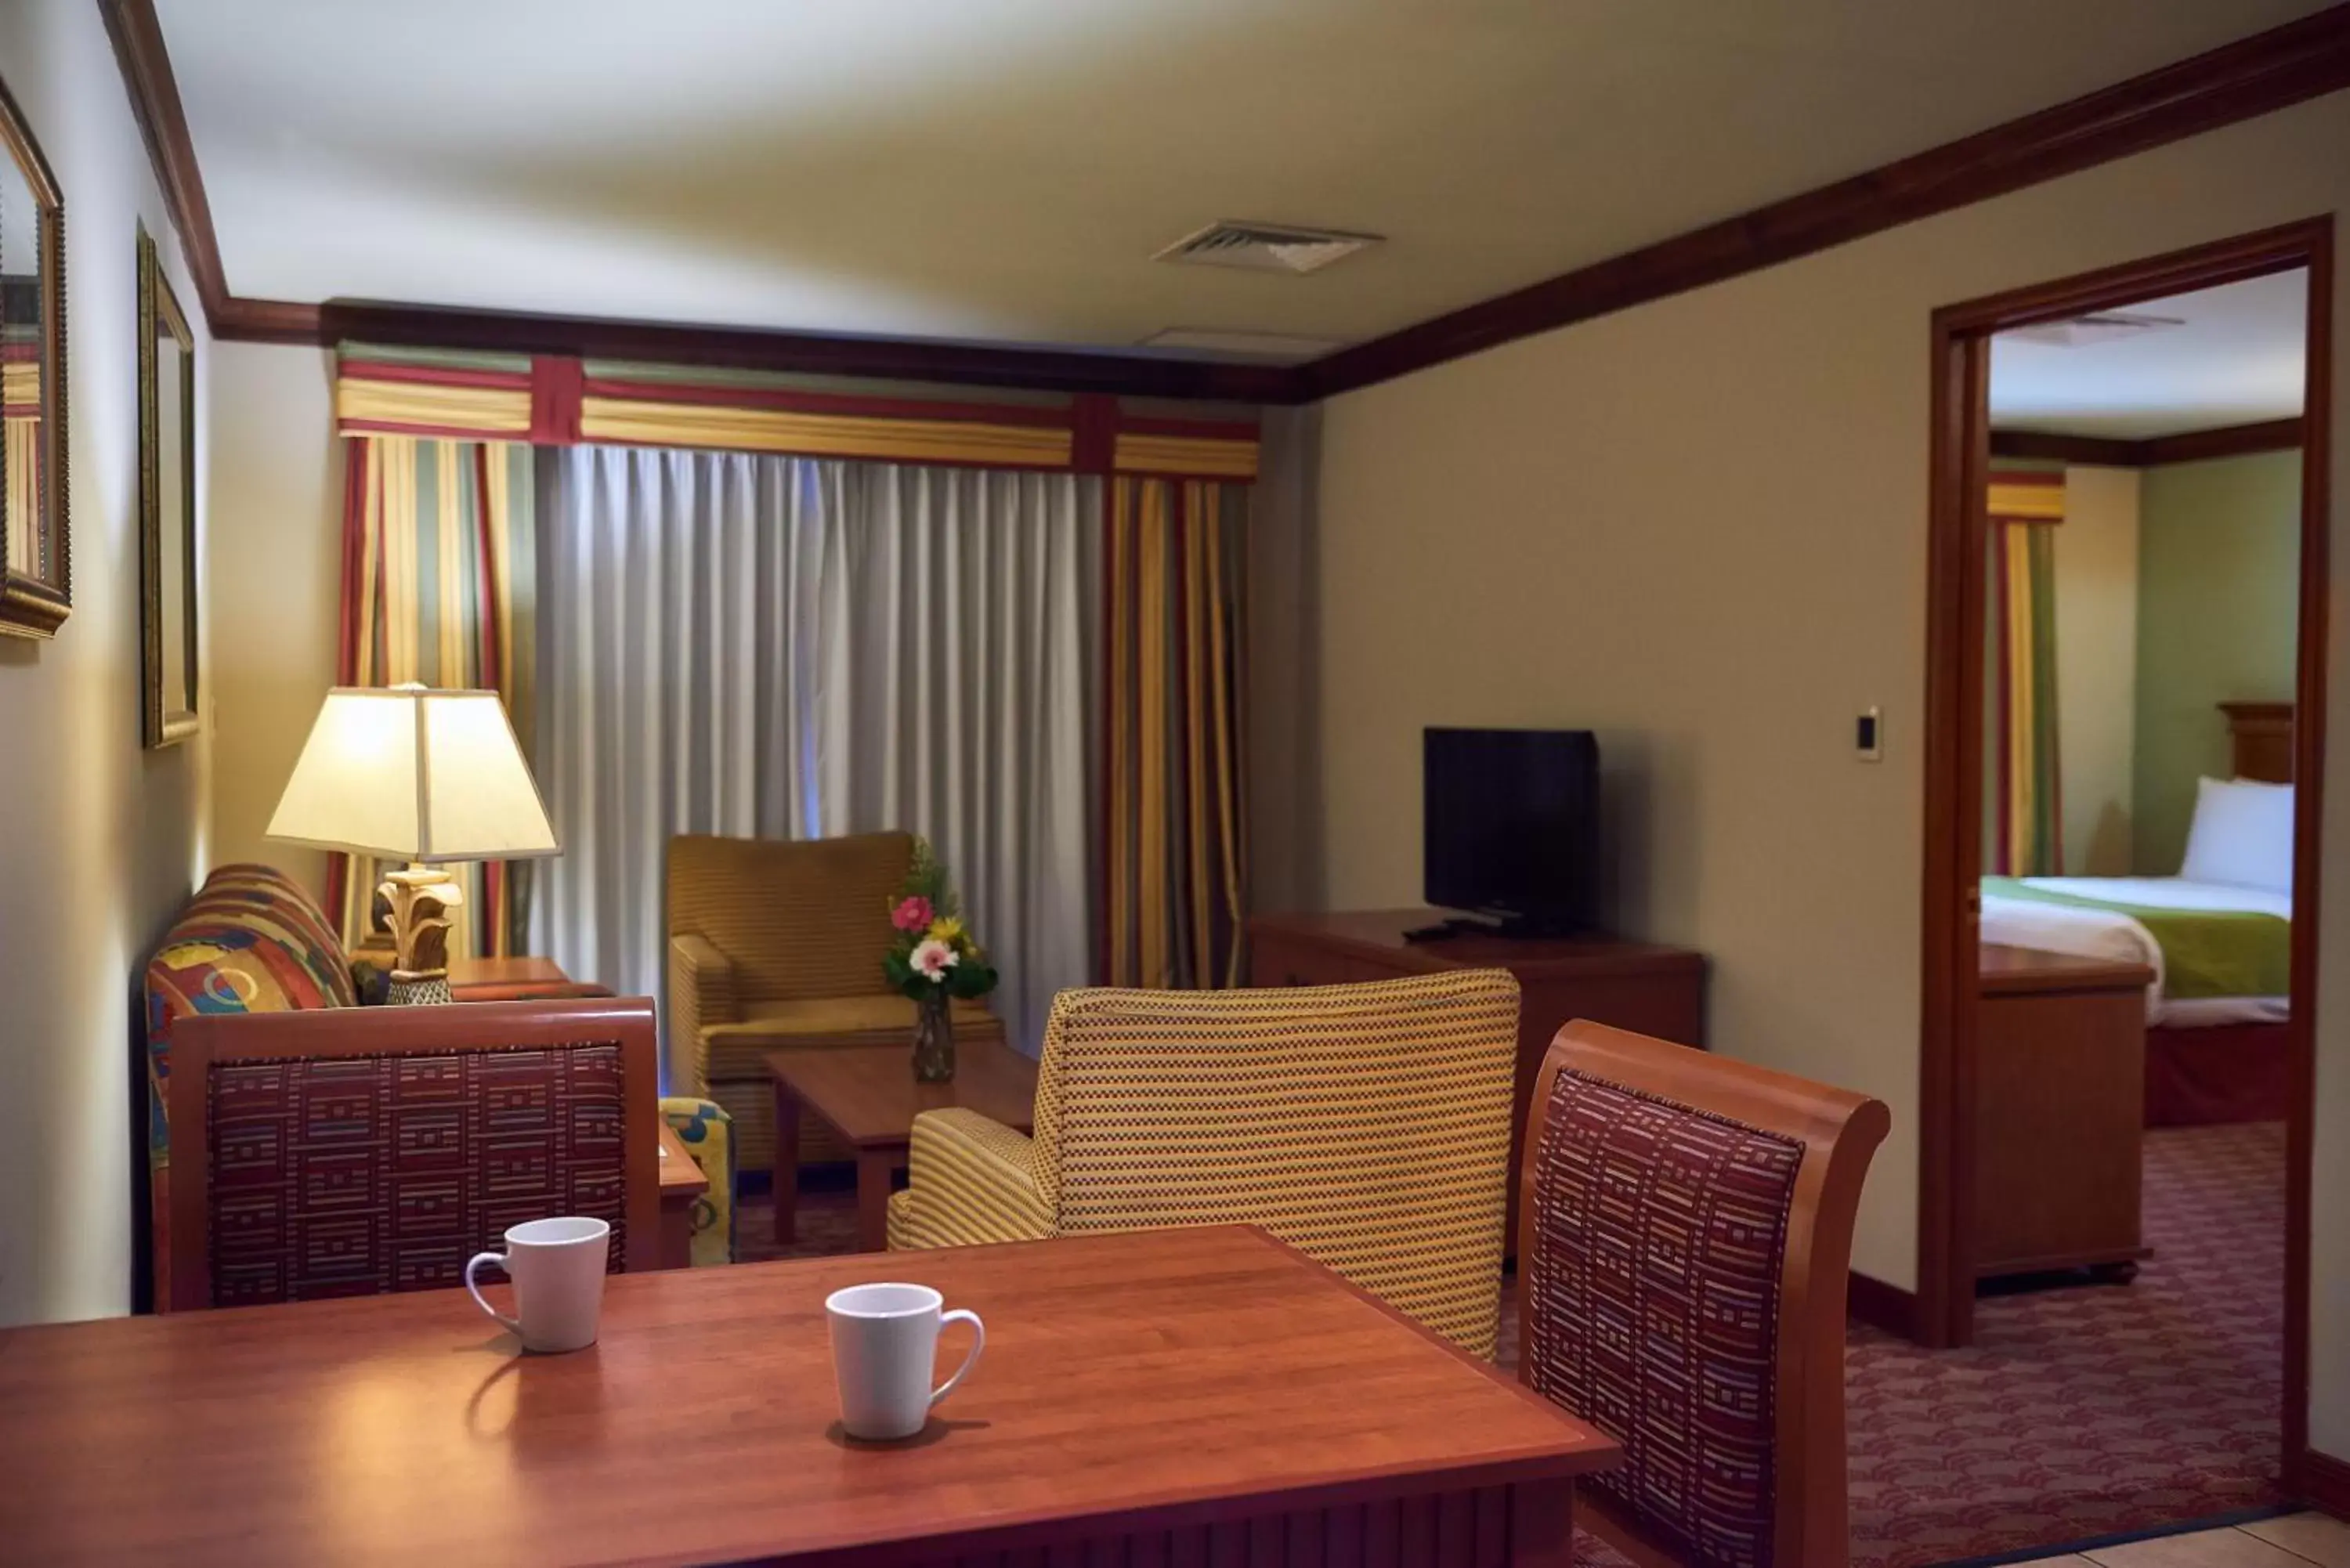 Seating Area in Suites las Palmas, Hotel & Apartments.